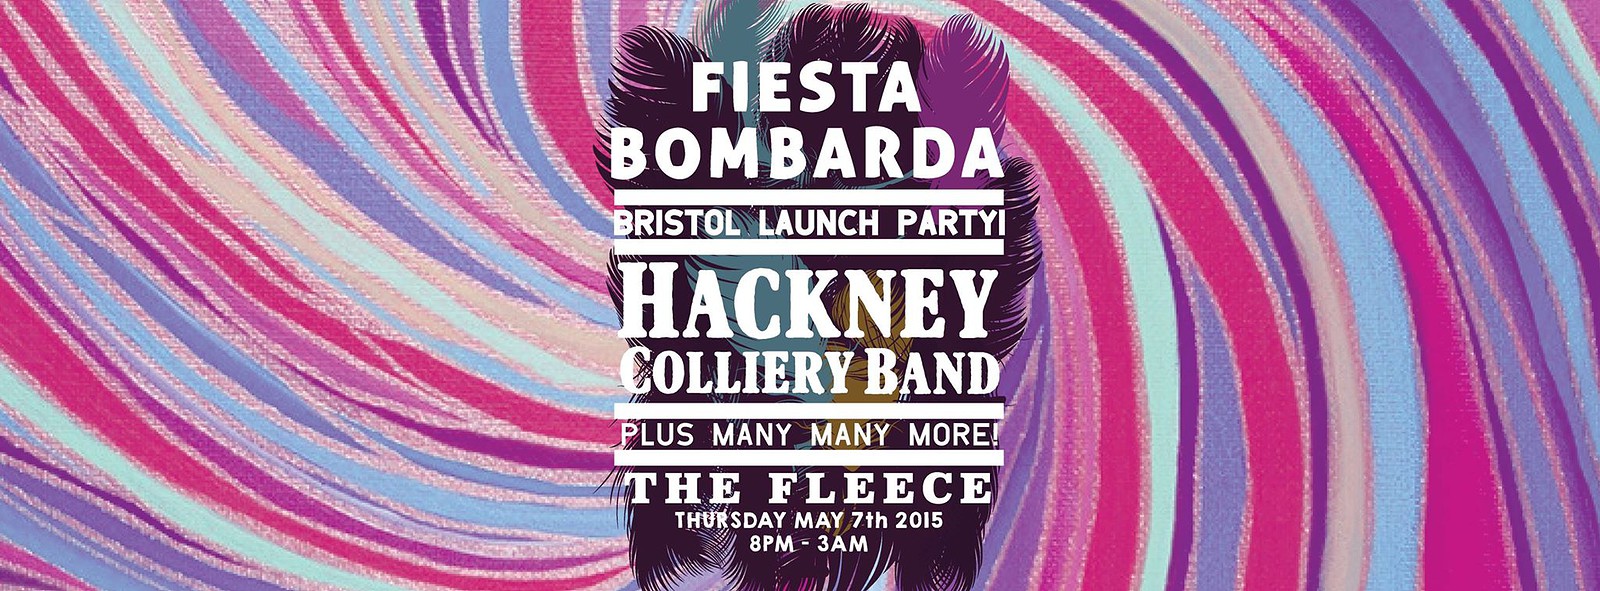 Fiesta Bombarda Bristol Launch at The Fleece